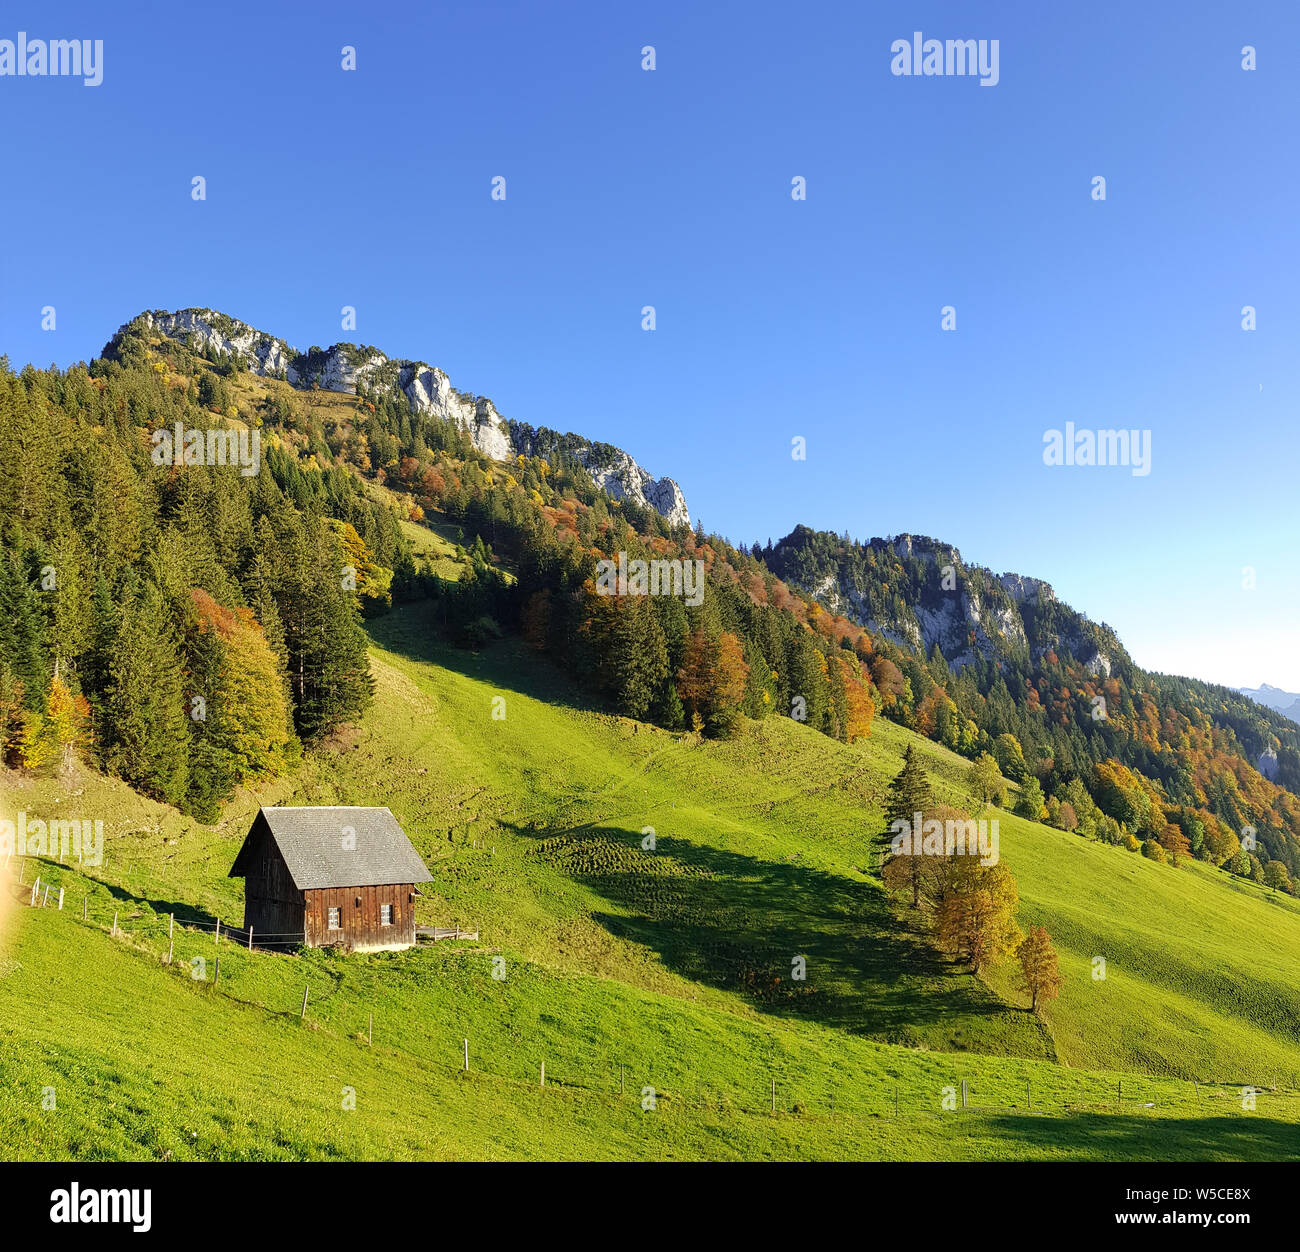 Swiss Alps, Switzerland Stock Photo